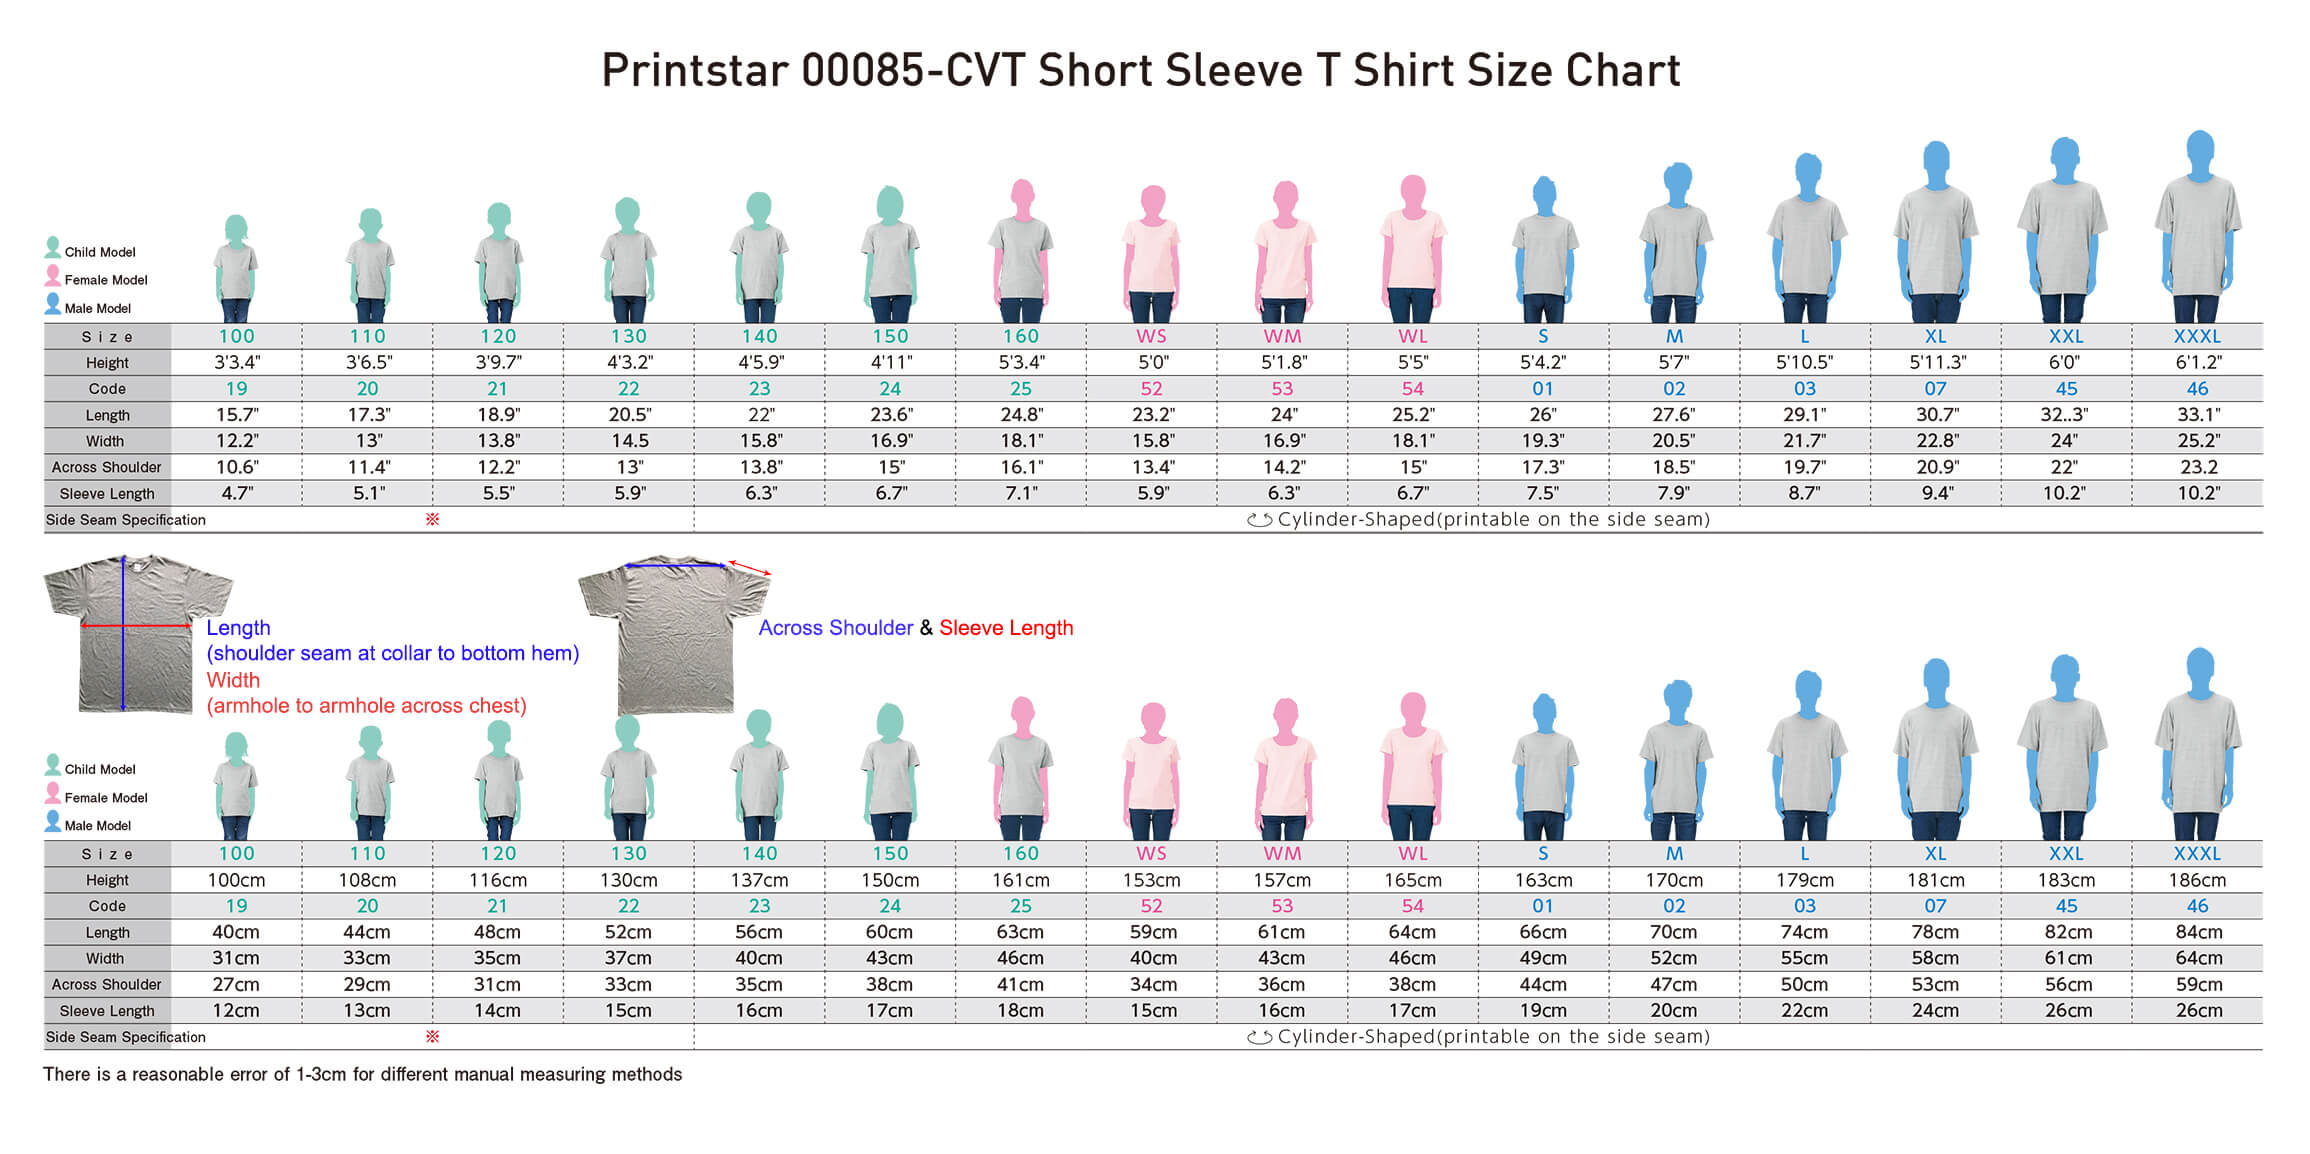 Printstar-00085-CVT-Short-Sleeve-T-Shirt-Size-Chart-inchcm